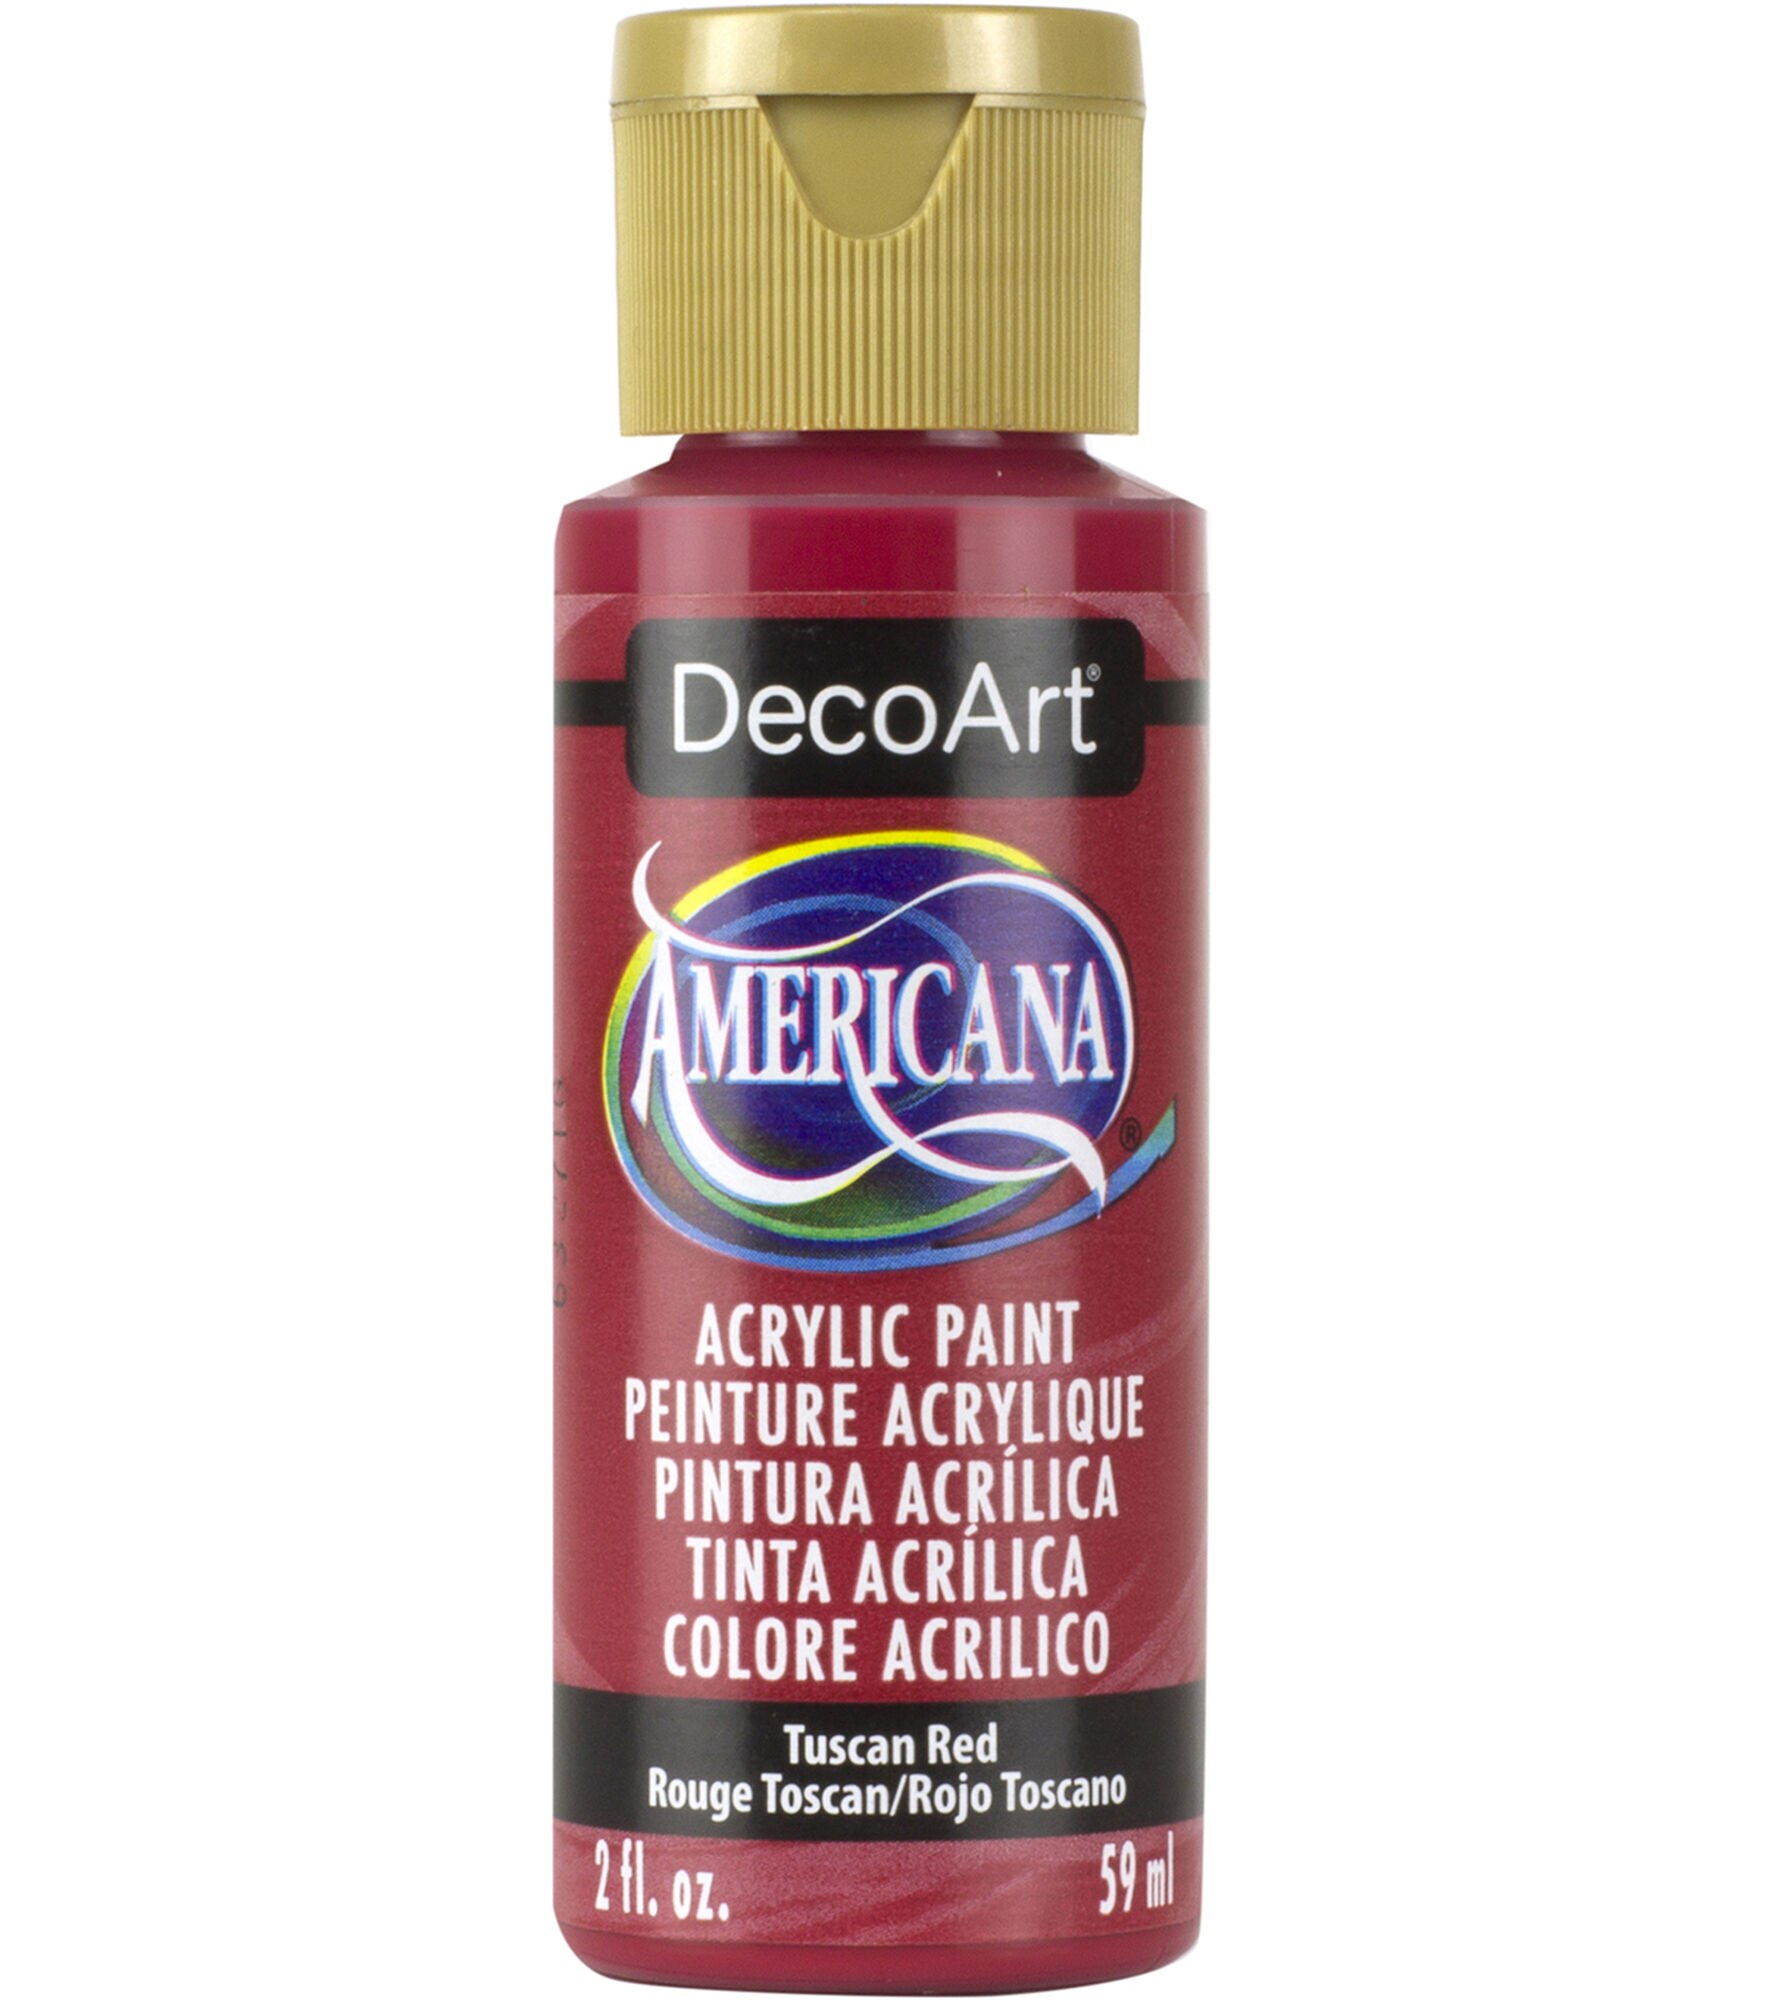 DecoArt Americana Acrylic 2oz Paint, Tuscan Red, hi-res